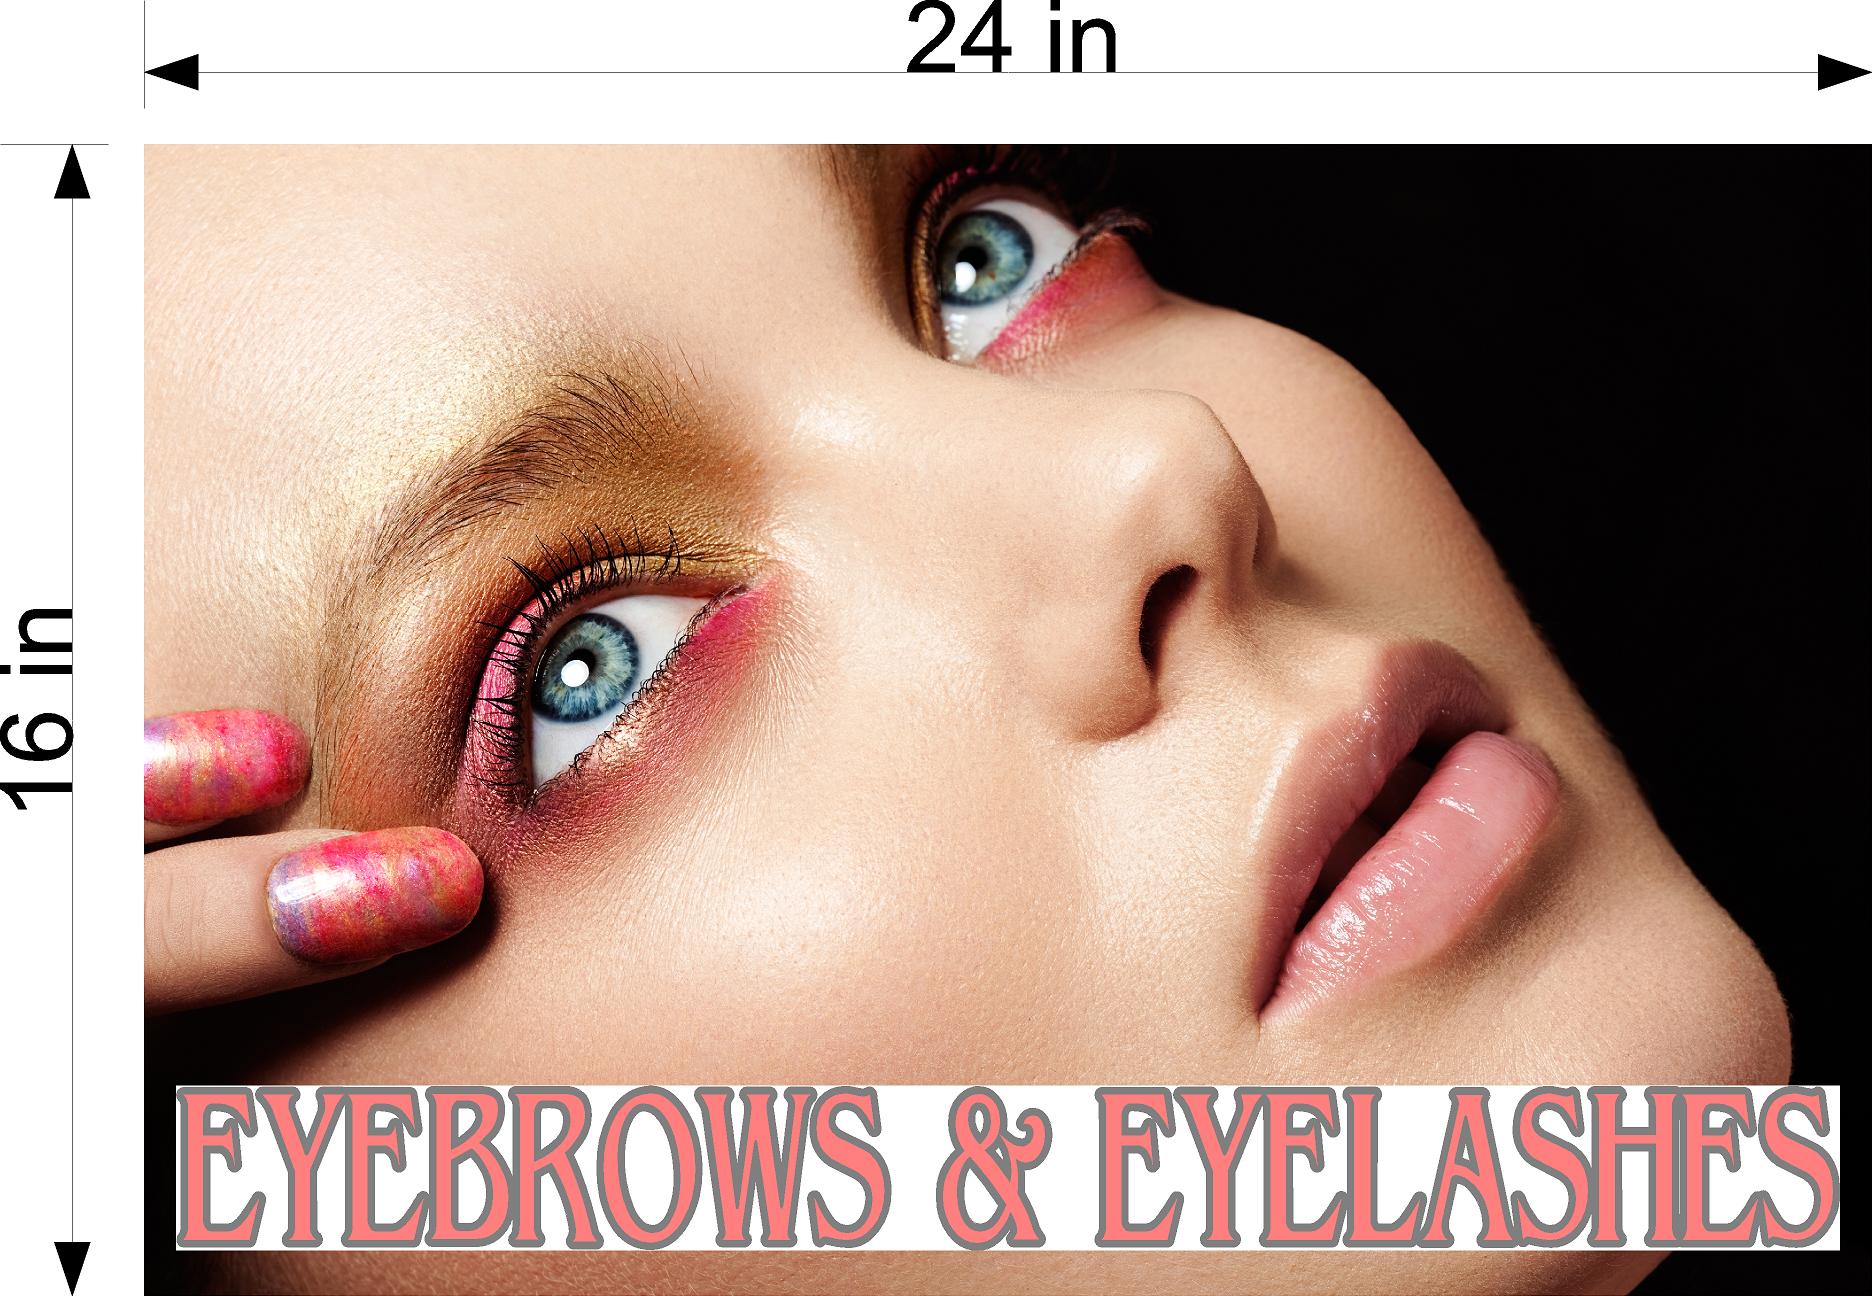 Eyebrows 13 Photo-Realistic Paper Poster Premium Interior Inside Sign Advertising Marketing Wall Window Non-Laminated Eyelashes Horizontal